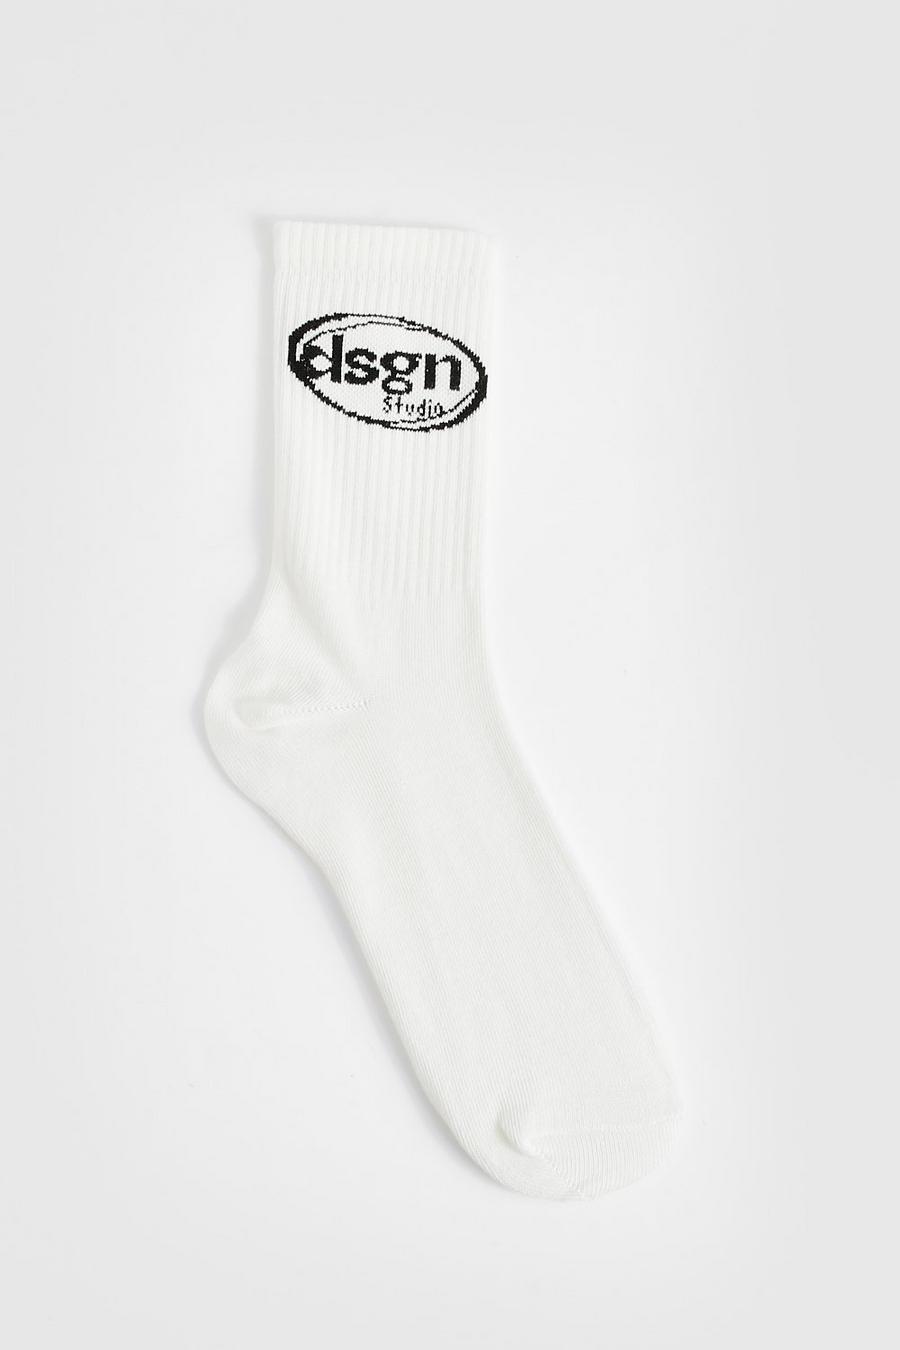 Ecru white Single Dsgn Studio Slogan Sports Sock